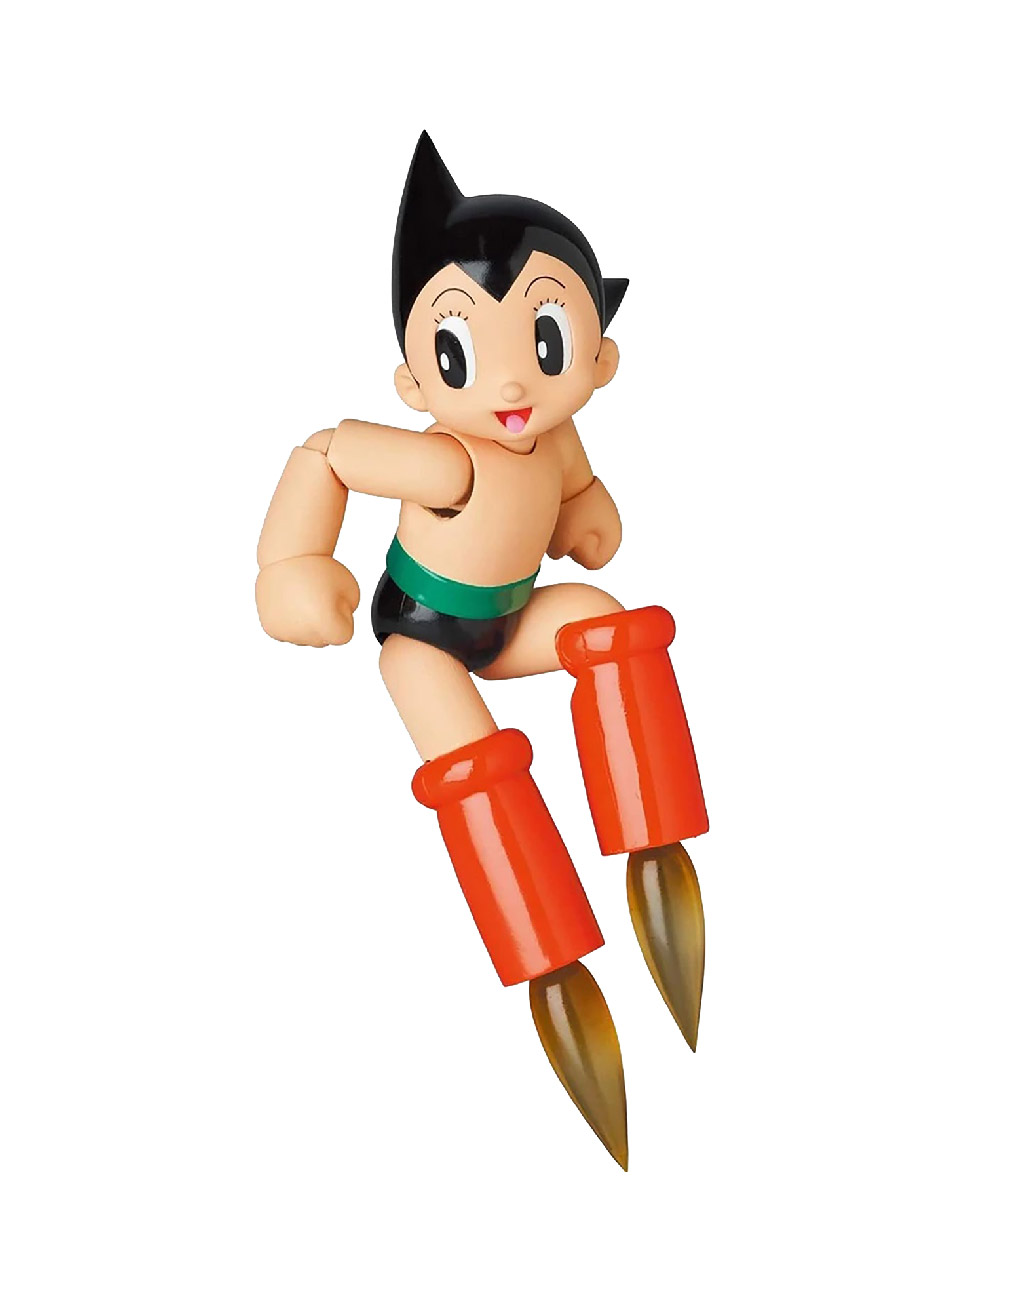 MAFEX Astro Boy No. 065 Toy Figure